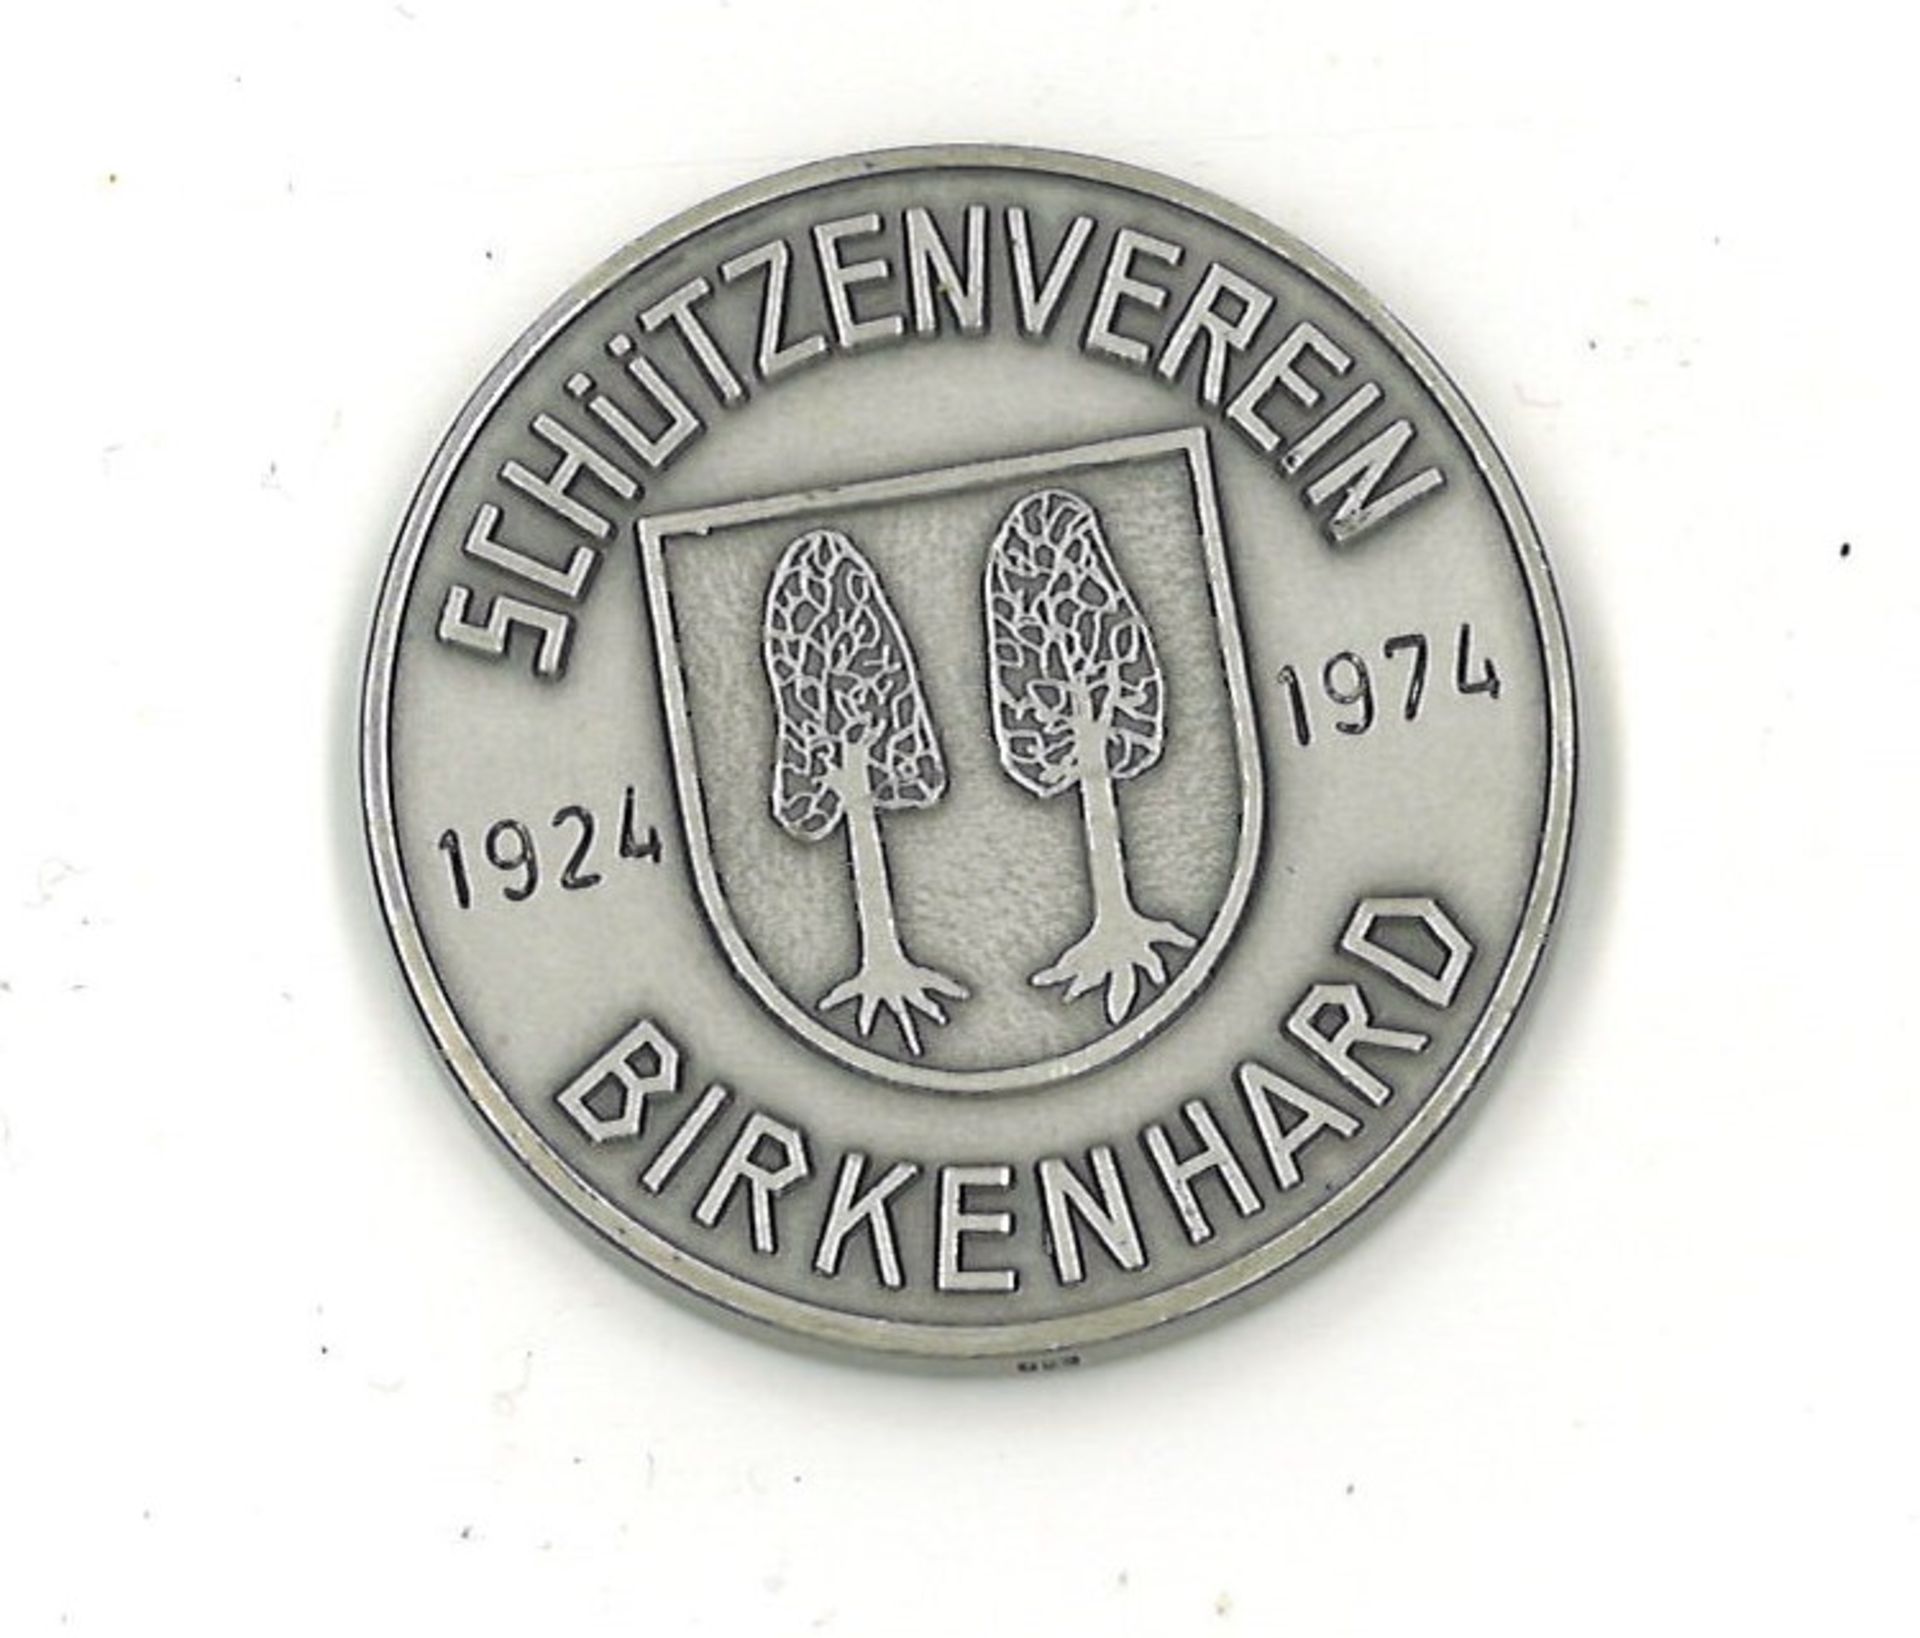 800er Silbermedaille "Schützenverein Birkenhard" 1924-1974